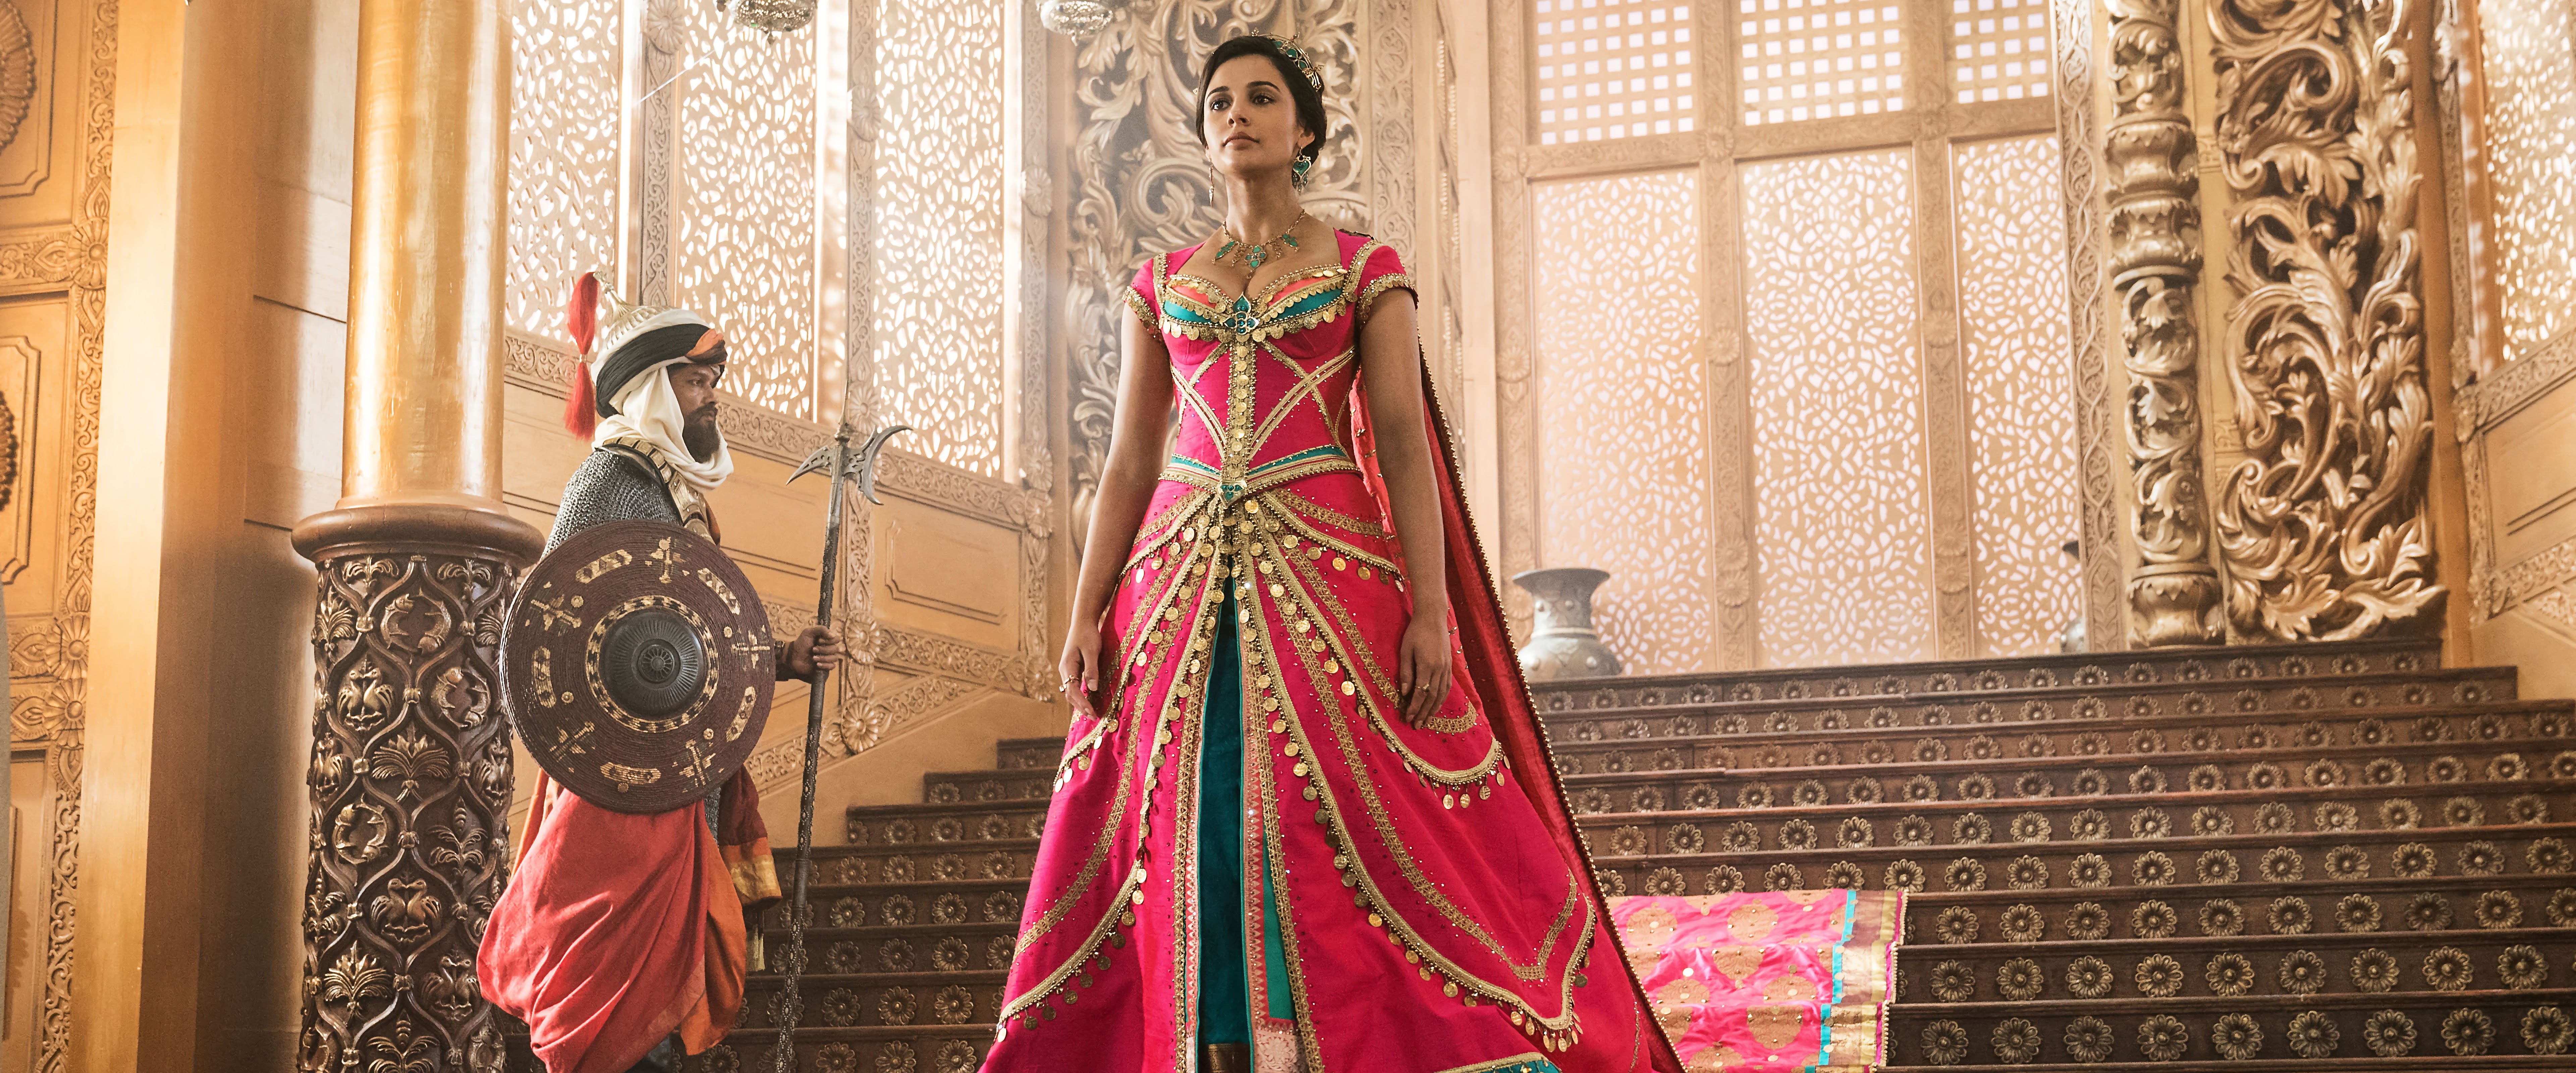 Princess Jasmine In Aladdin Movie 2019 Wallpapers